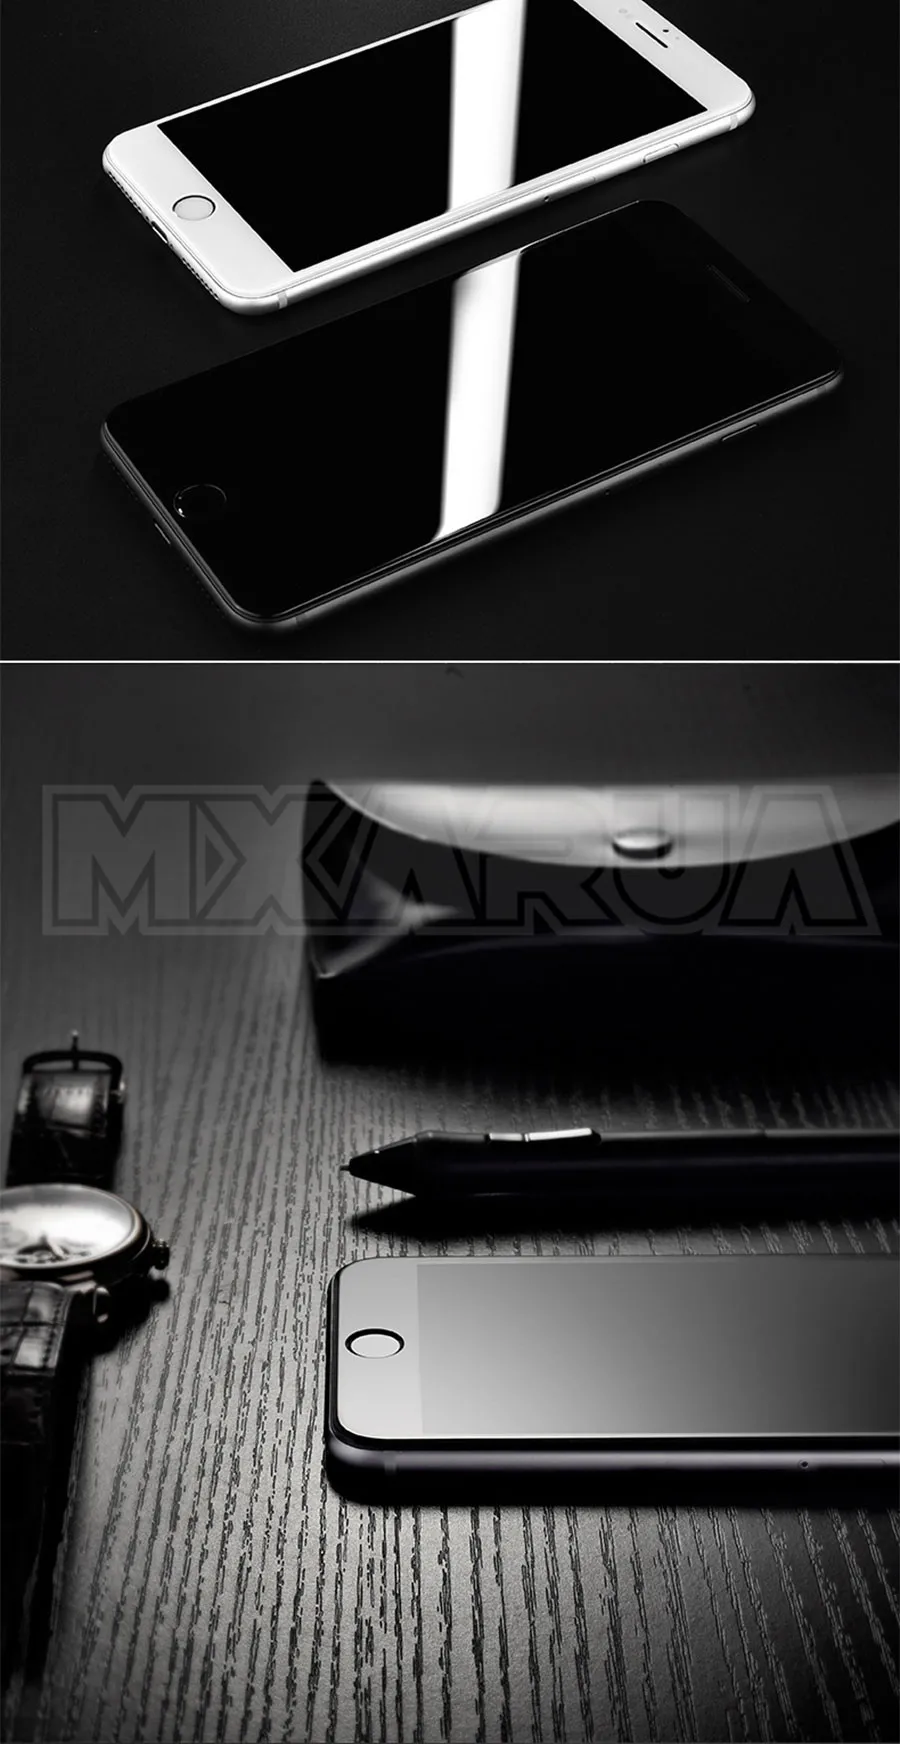 99D полное покрытие из закаленного стекла для iPhone X XR XS 11 Pro Max защита экрана iPhone 8 7 6 6s Plus Защитная стеклянная пленка